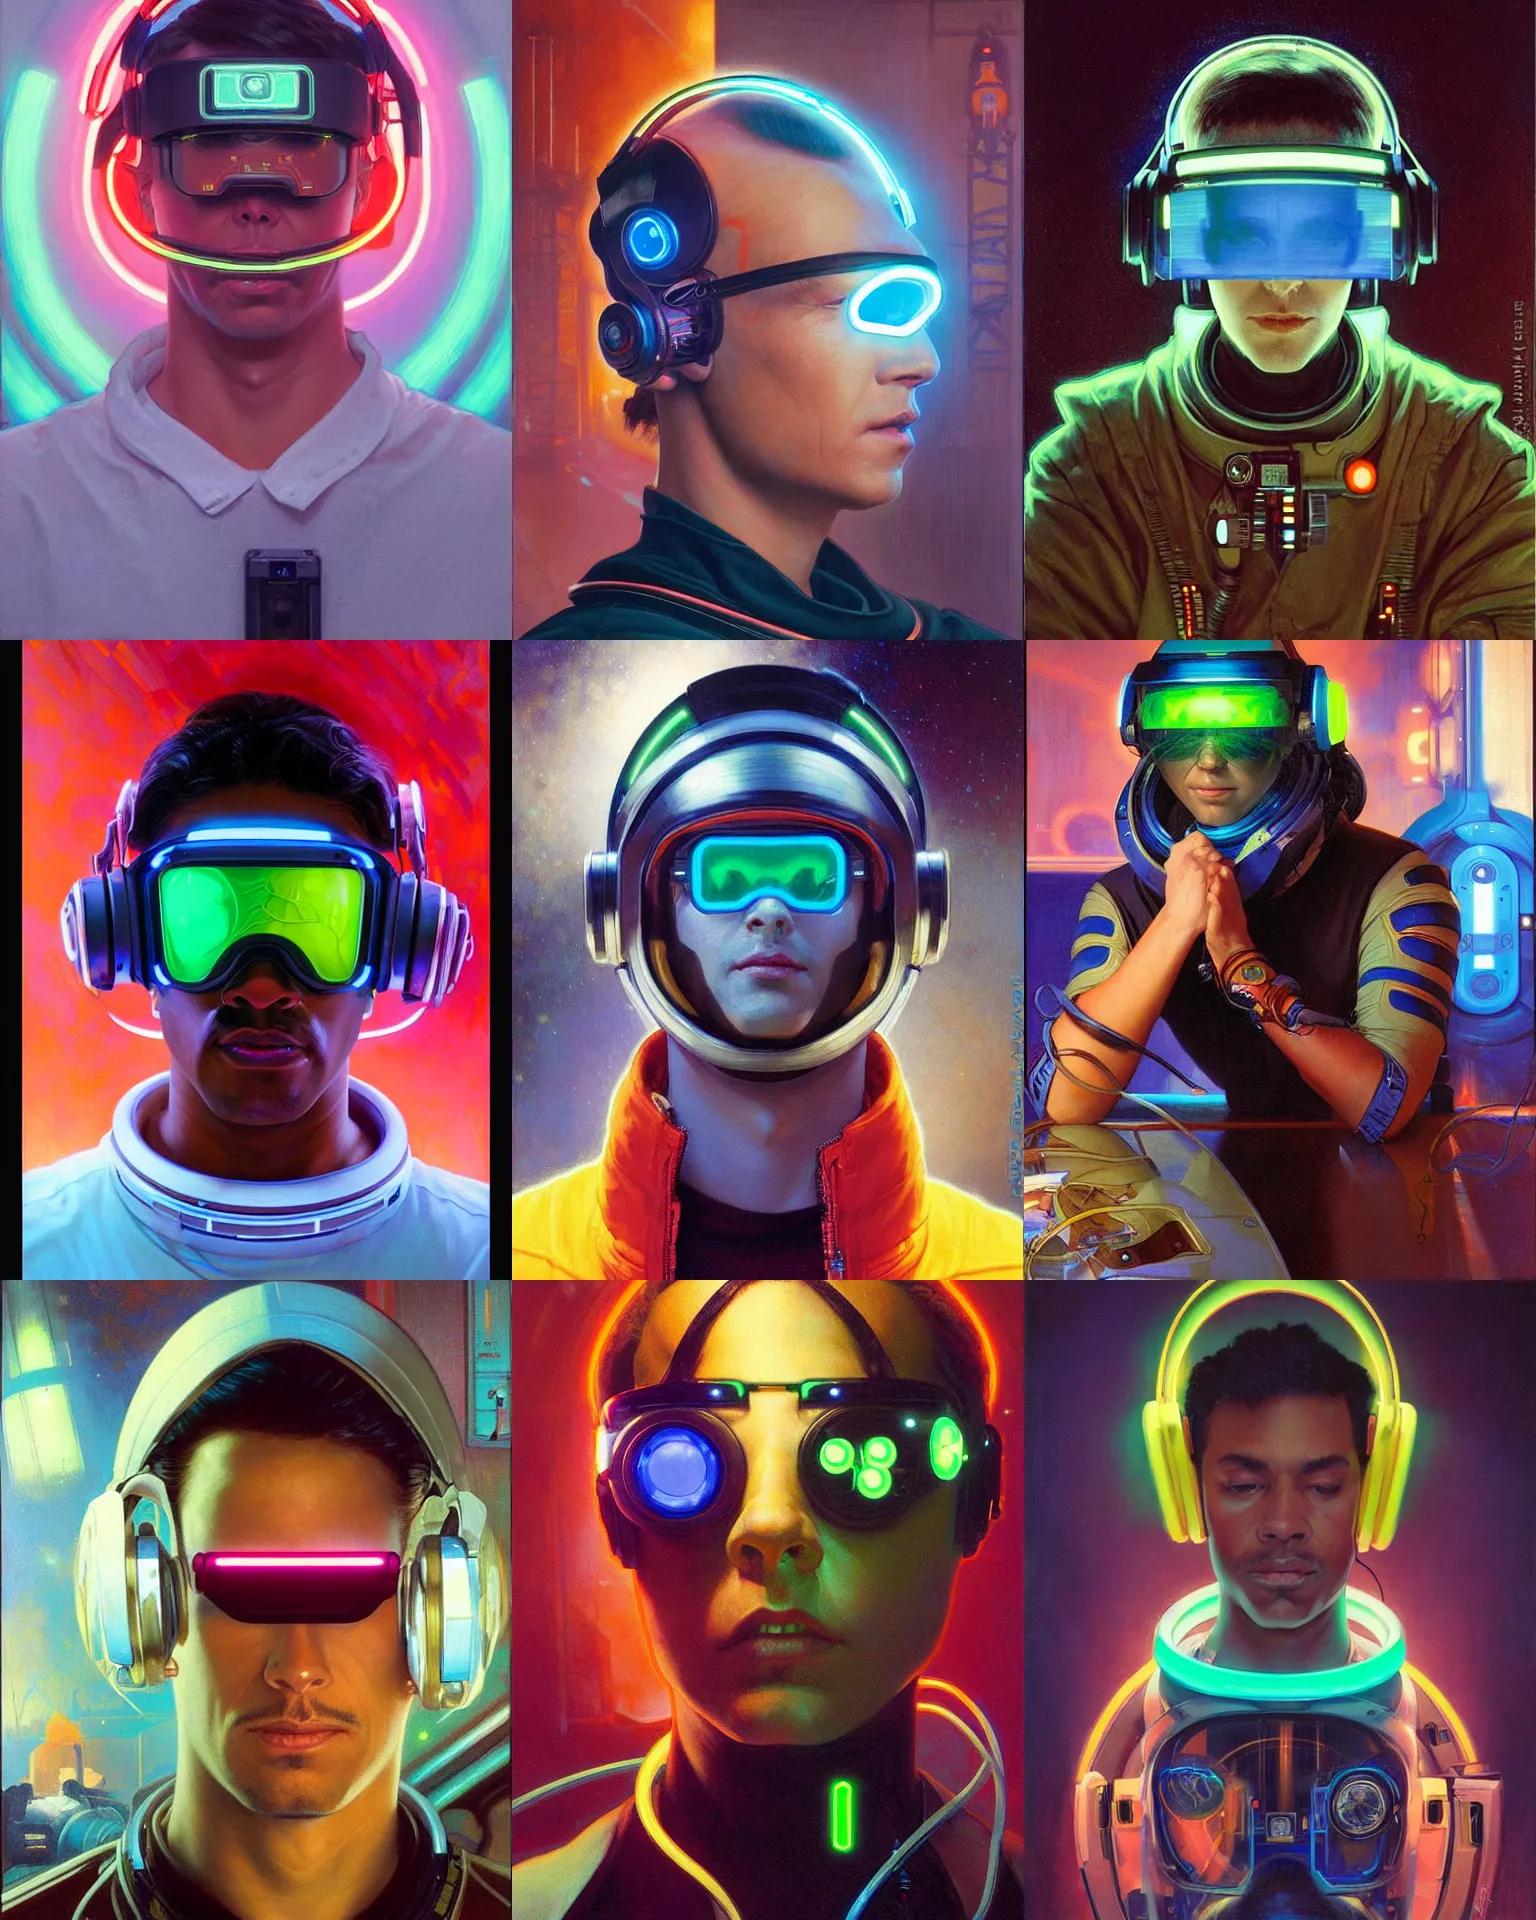 Prompt: neon cyberpunk programmer with glowing geordi visor over eyes and sleek headphones headshot portrait painting by donato giancola, rhads, loish, alphonse mucha, mead schaeffer astronaut fashion photography